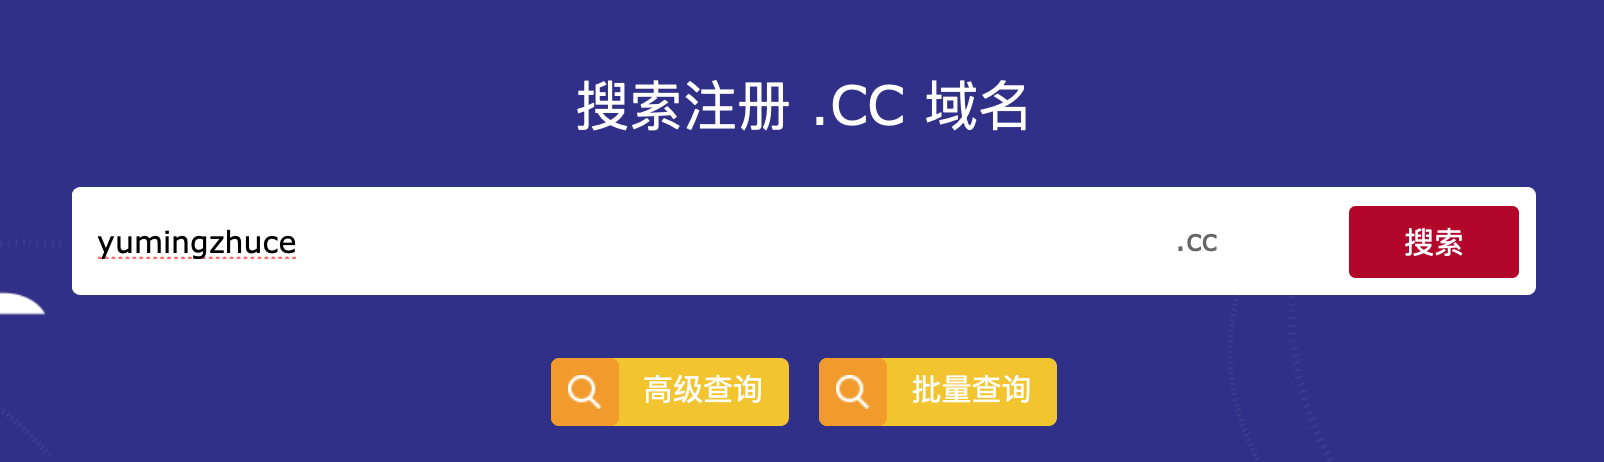 cc域名免实名注册